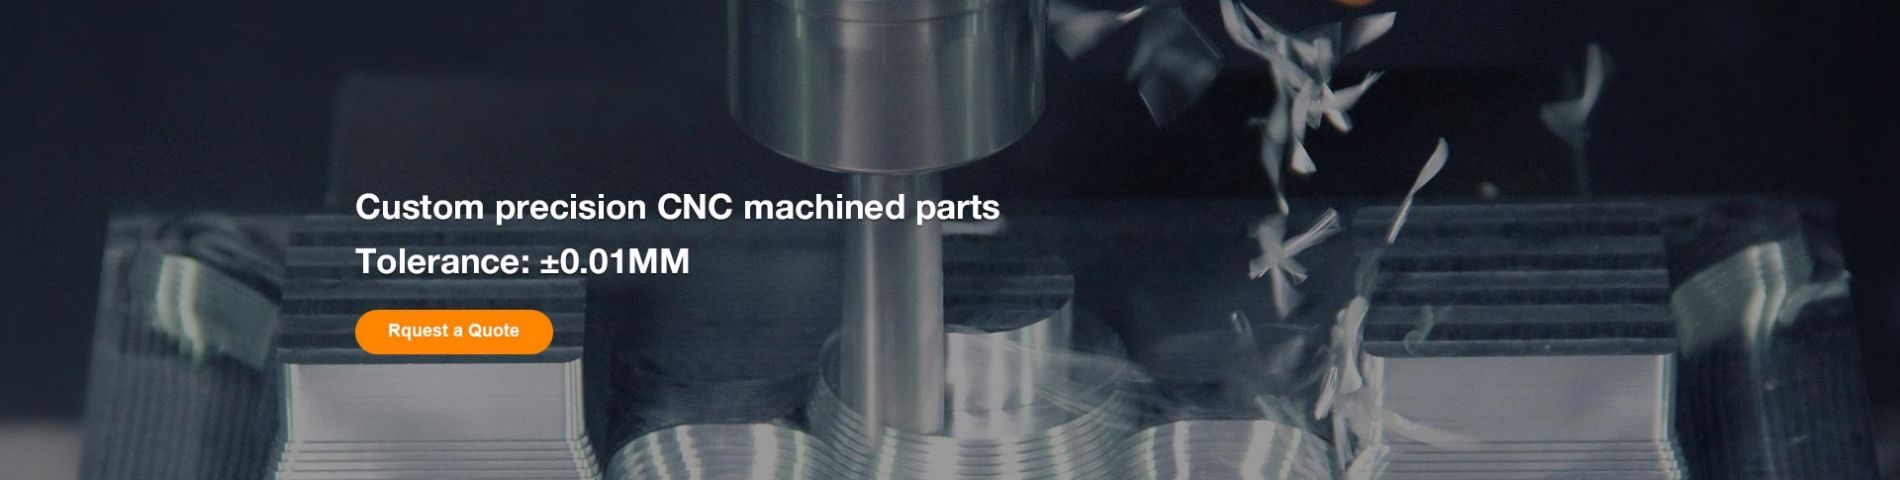 Custom precision CNC machined parts, Tolerance：±0.01MM